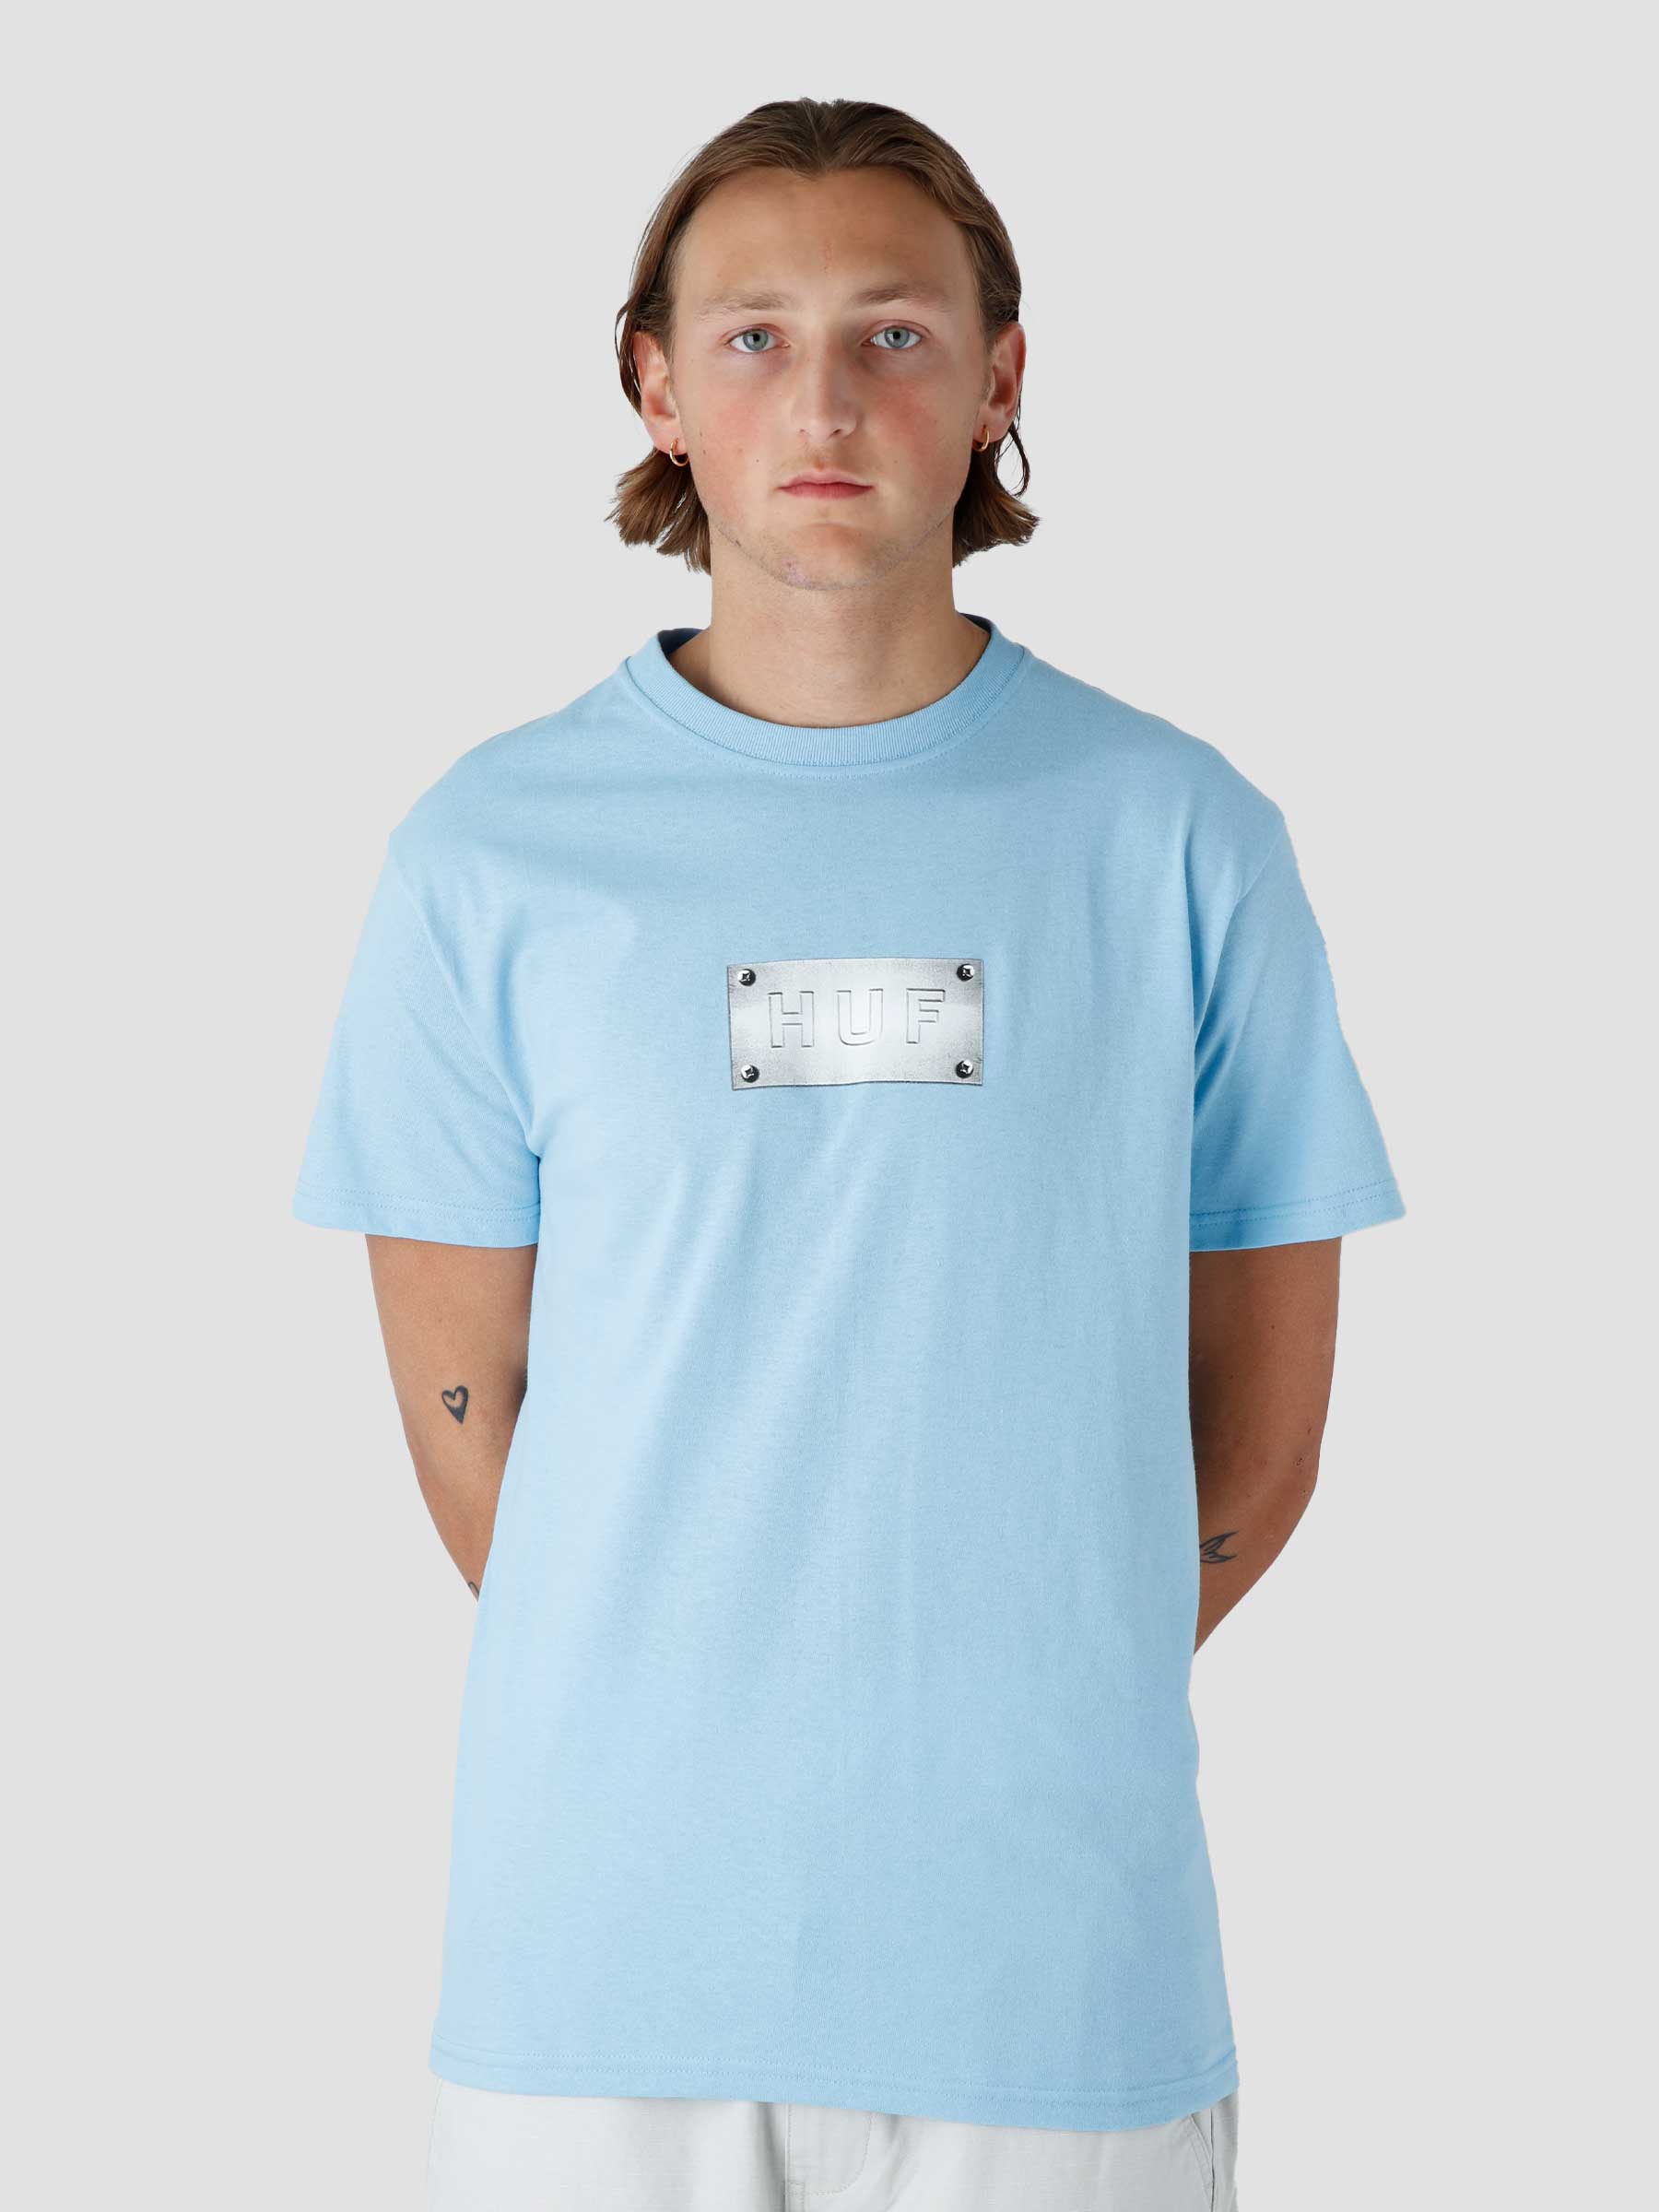 Hardware T-shirt Tee Light Blue TS01851